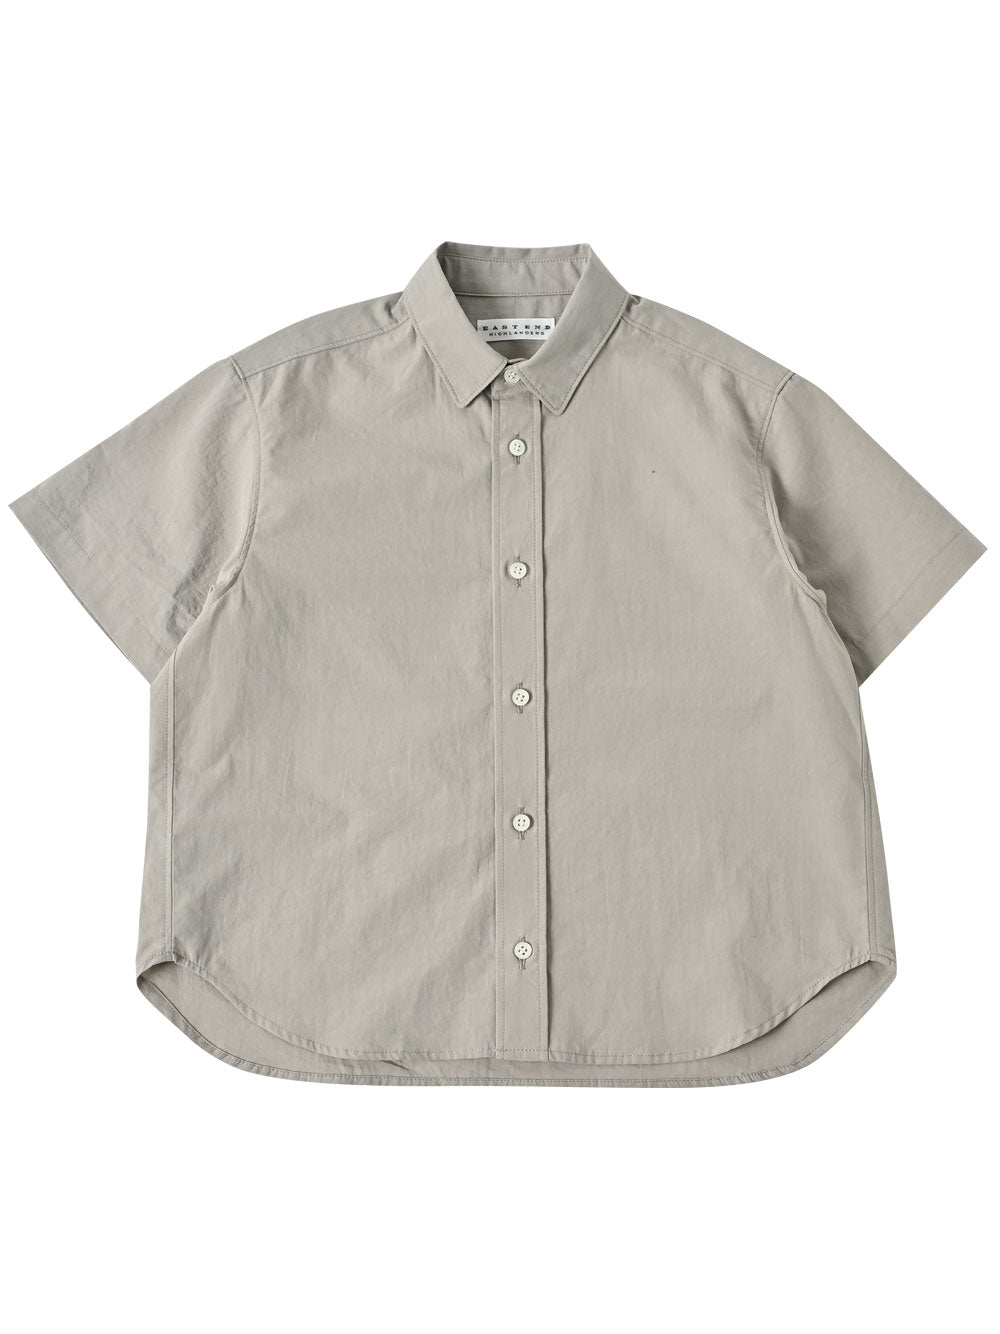 Pearl Grey Shirt